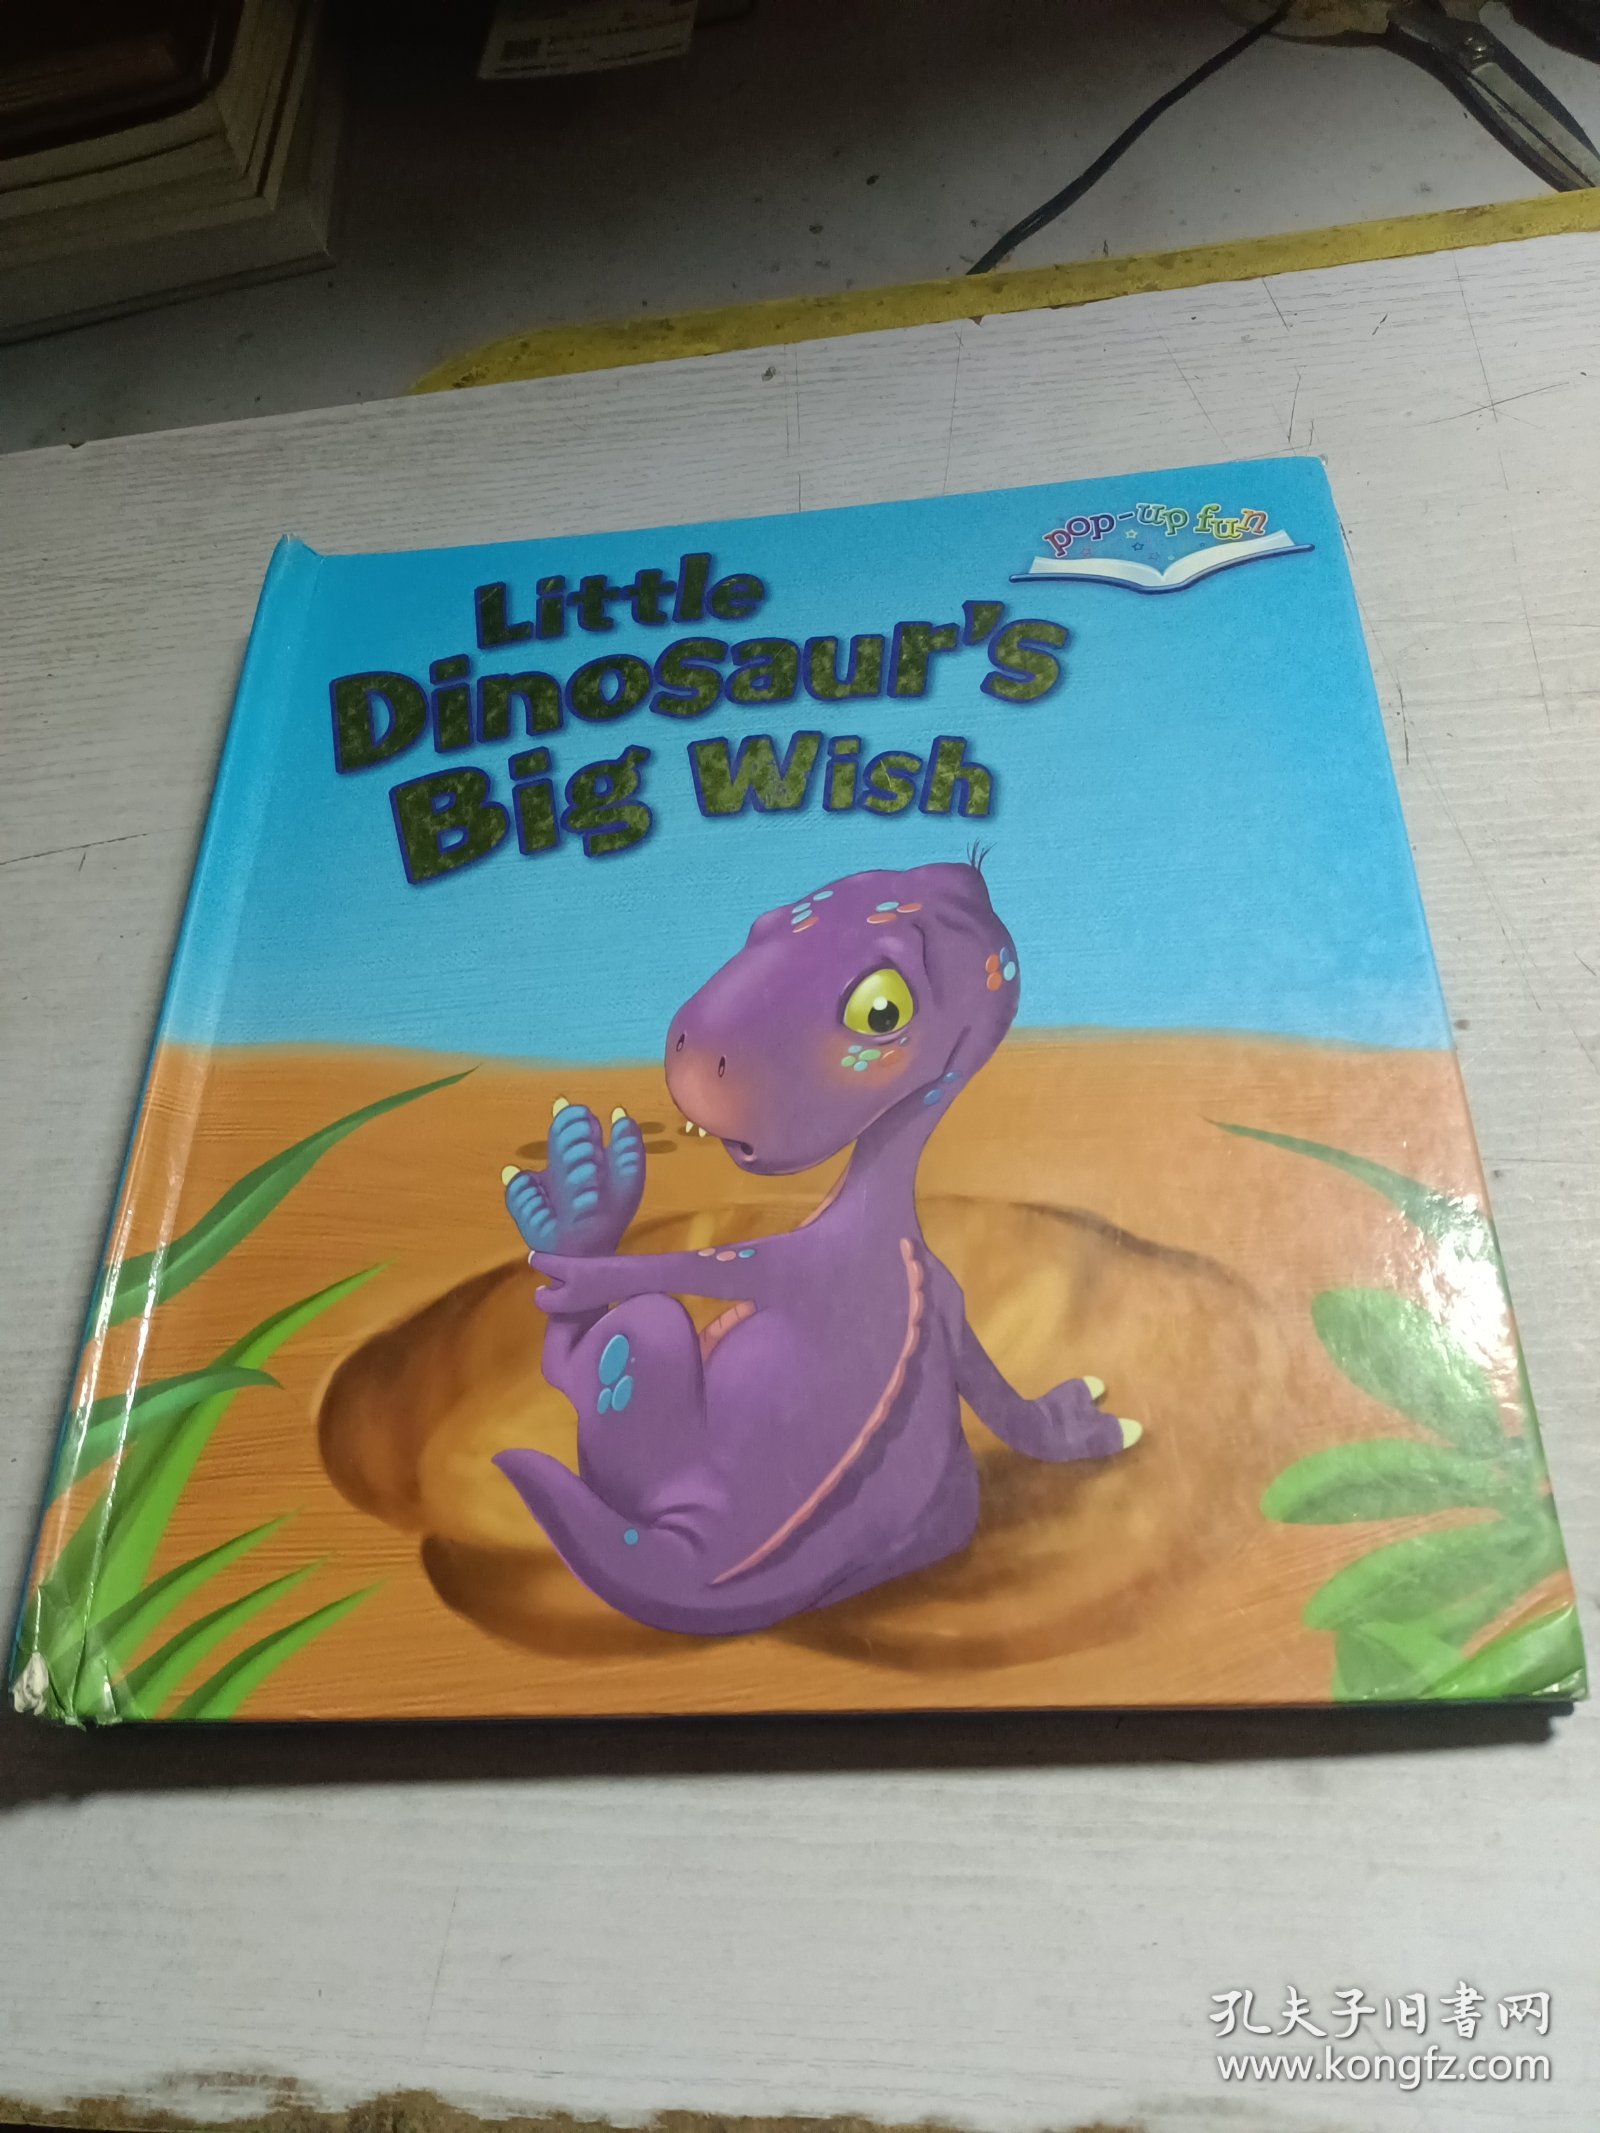 Little Dinosaurs Big wish